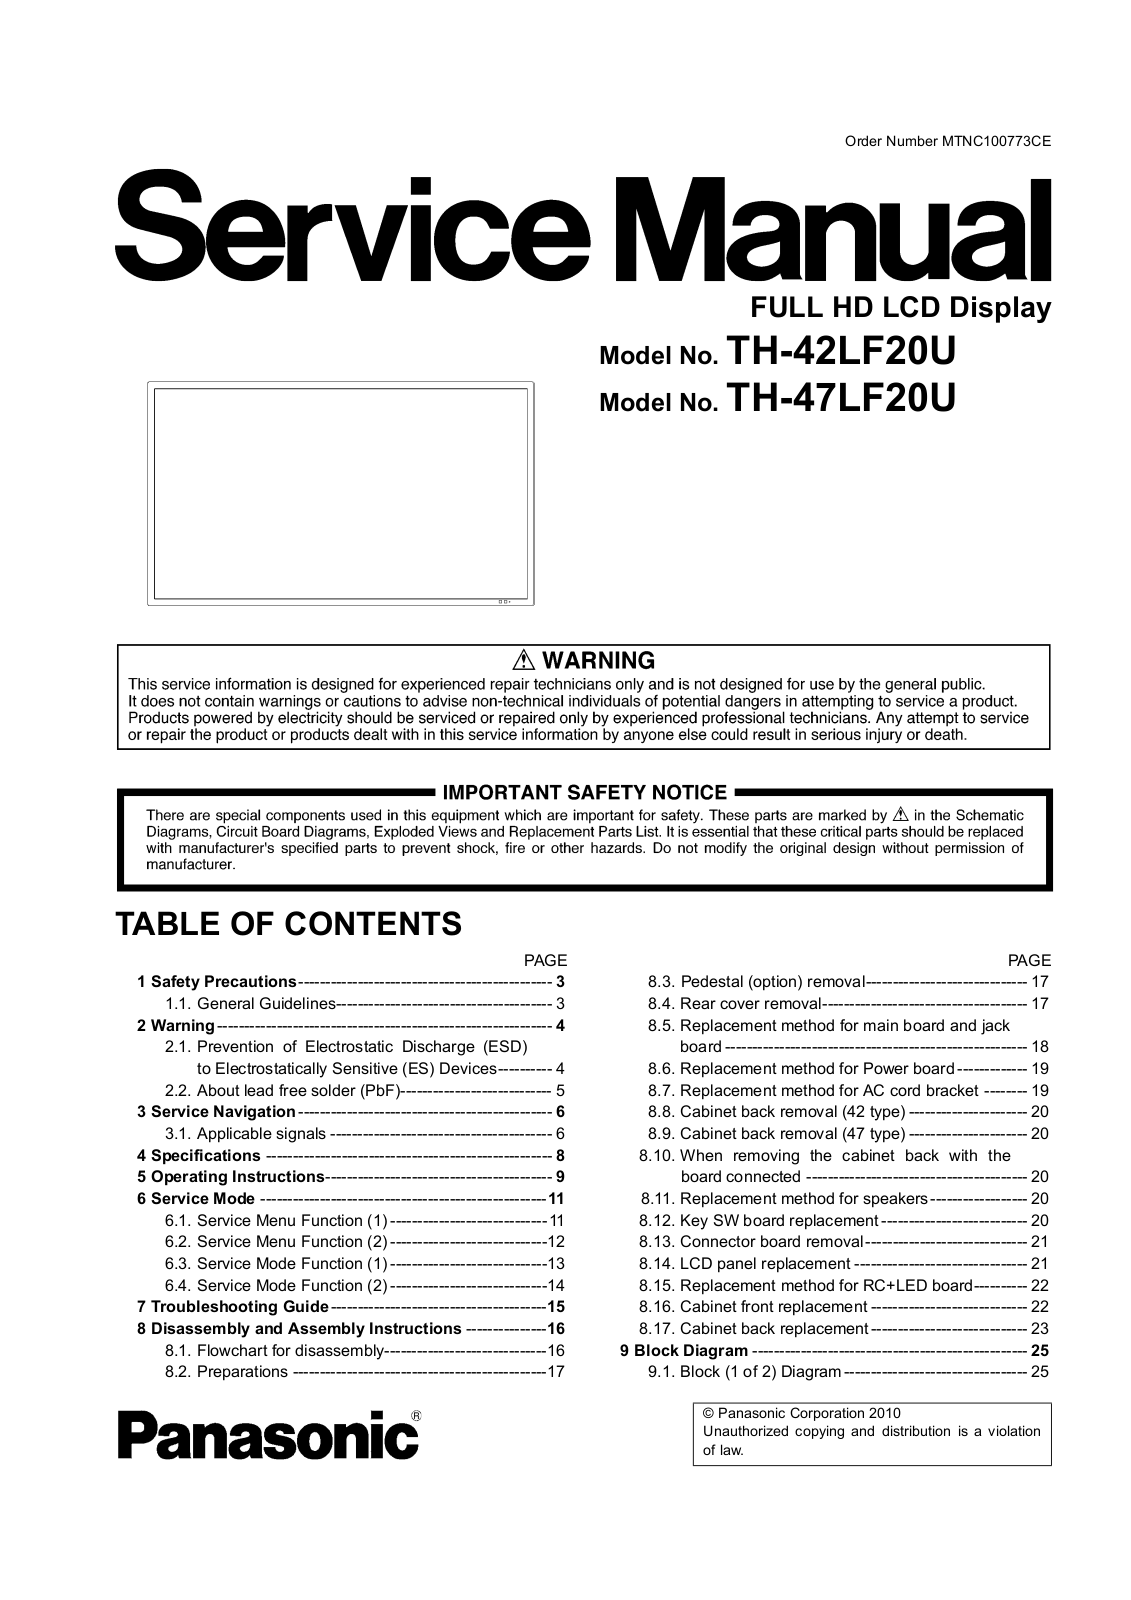 Panasonic TH-42LF20U, TH-47LF20U Service Manual